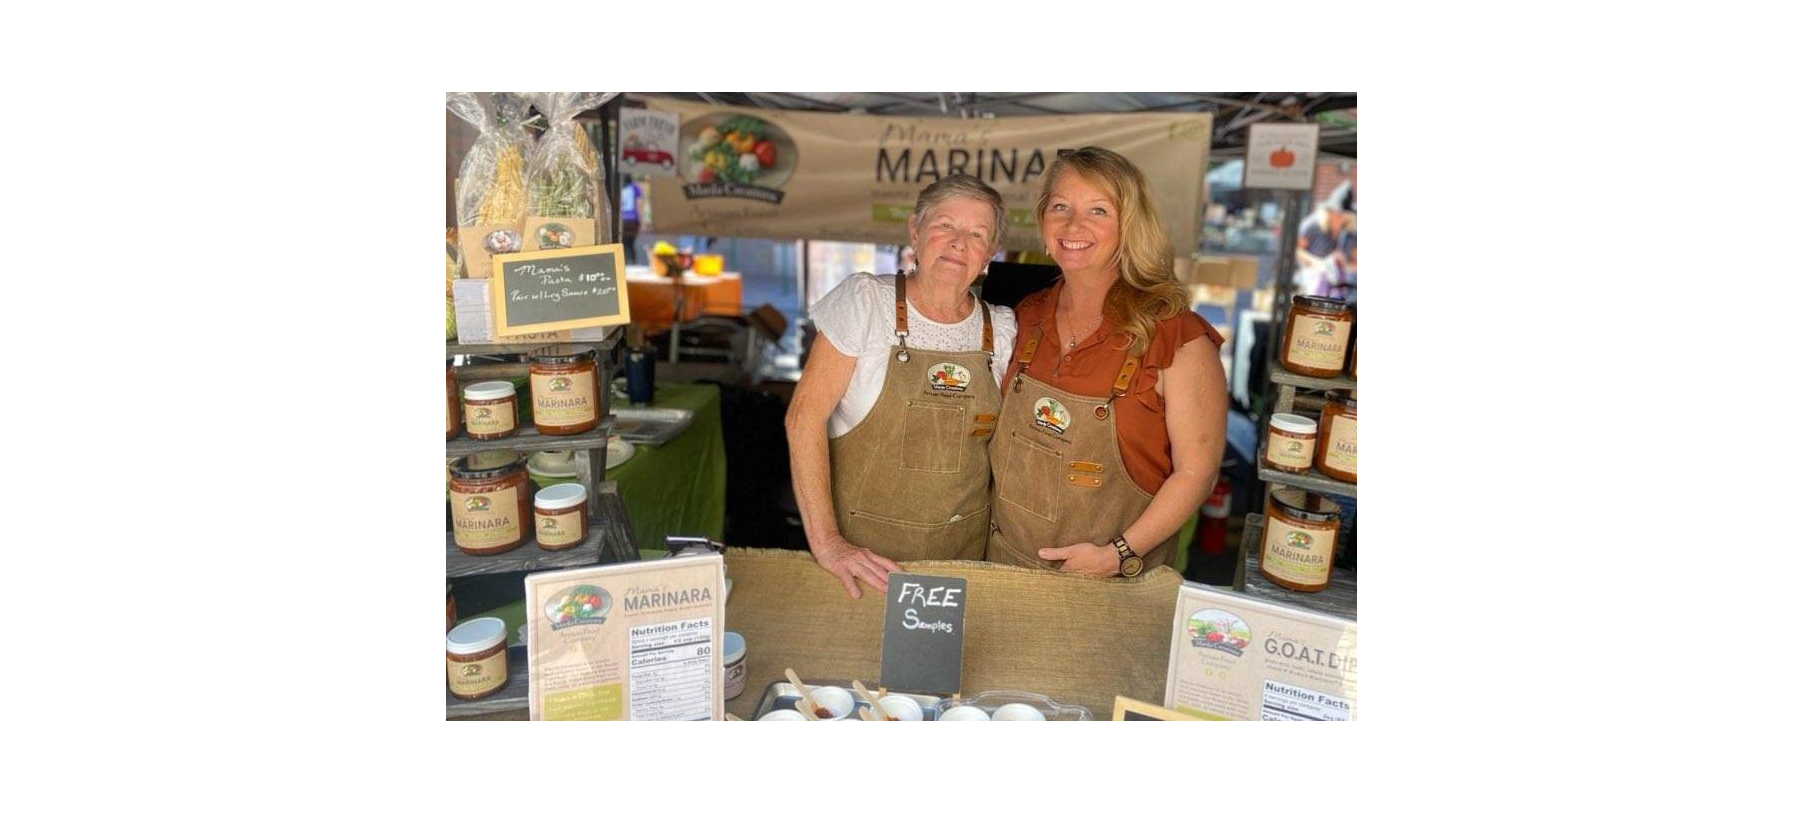 ManJa Creations Artisan Food Company - Amy Cords